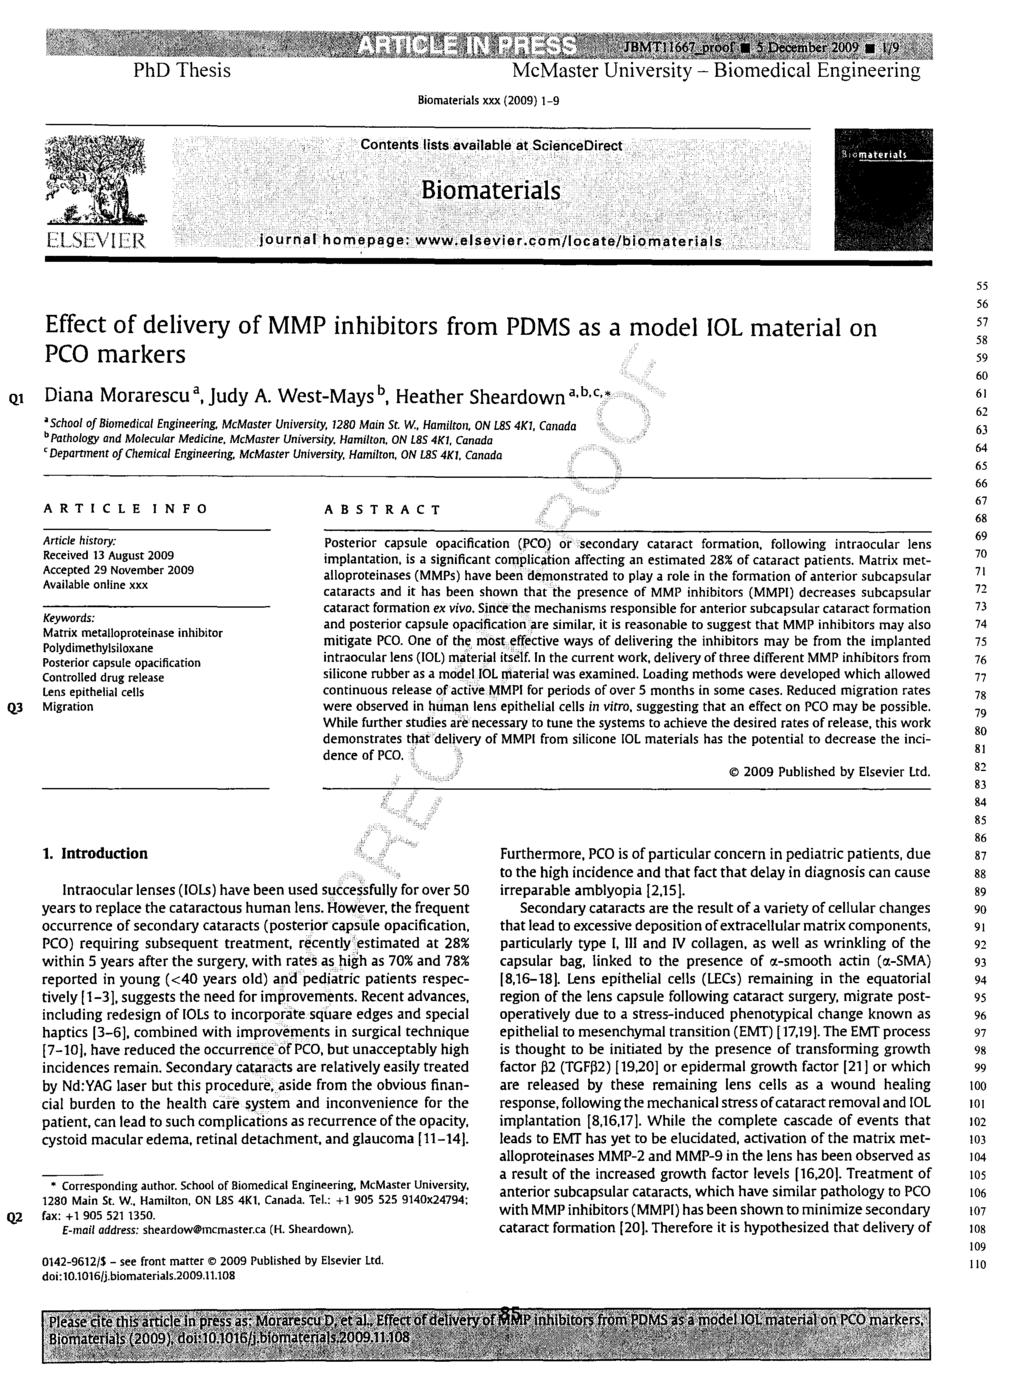 PhD Thesis Biomaterials xxx (2009) 1-9 ELSEVIER '.,...,,:. ::':.:' jourrla I homepage: www;elsevier.